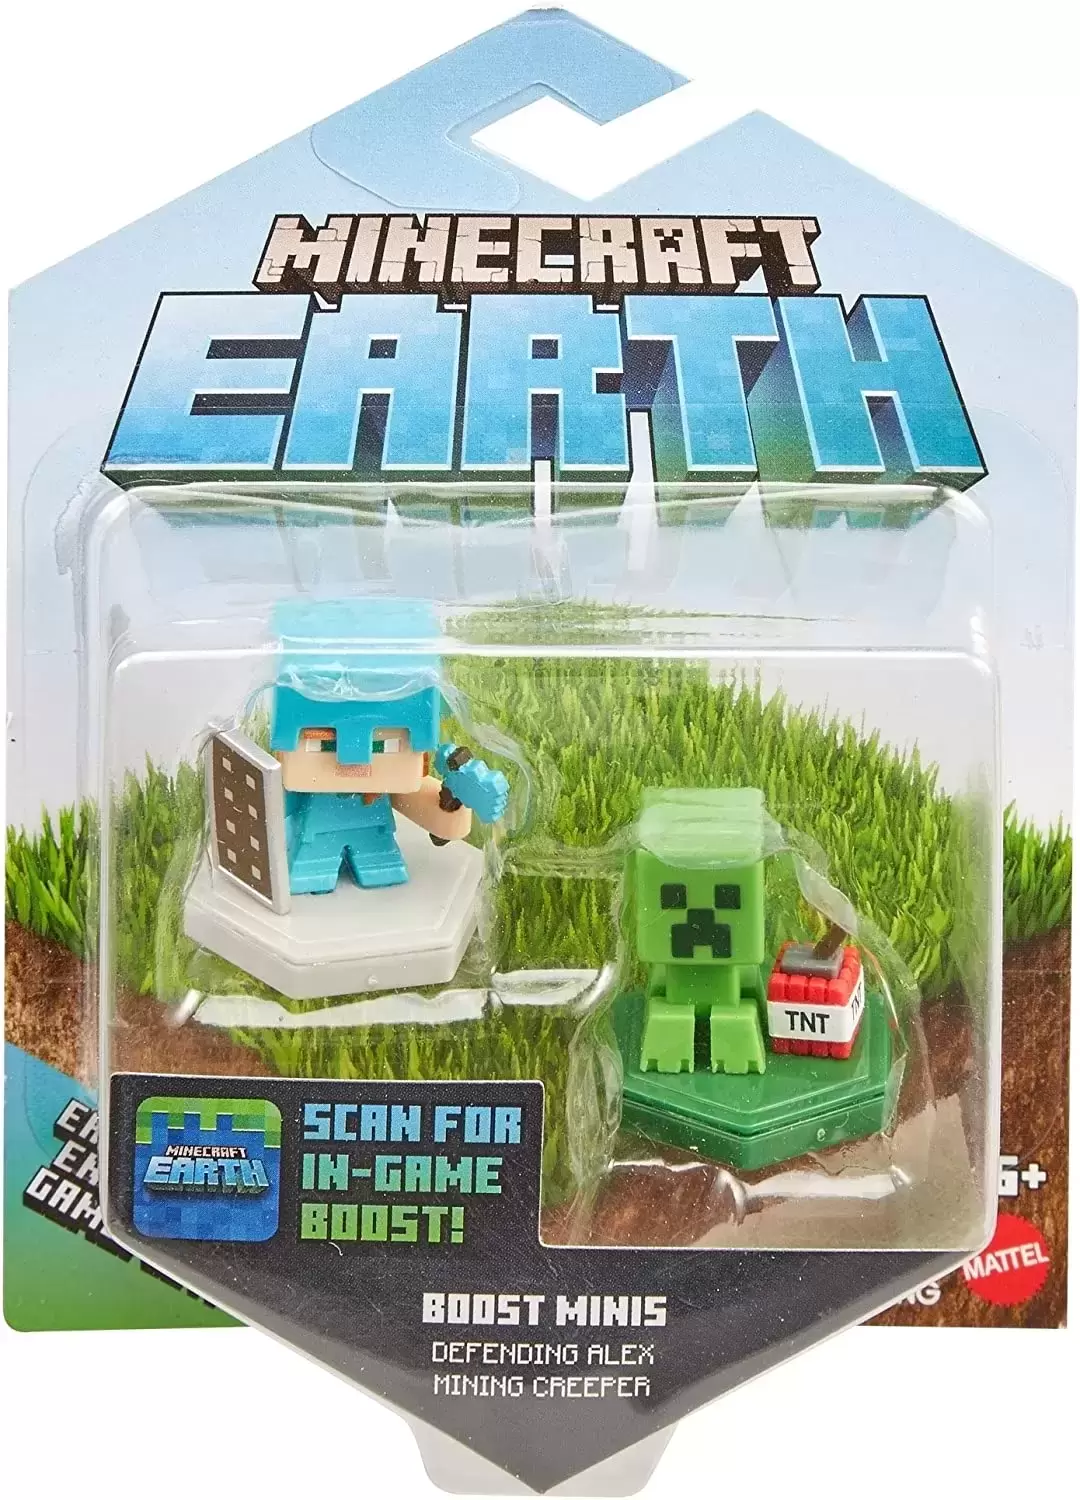 Minecraft - Mattel - Earth - Boost Minis  : Defending Alex / Mining Creeper